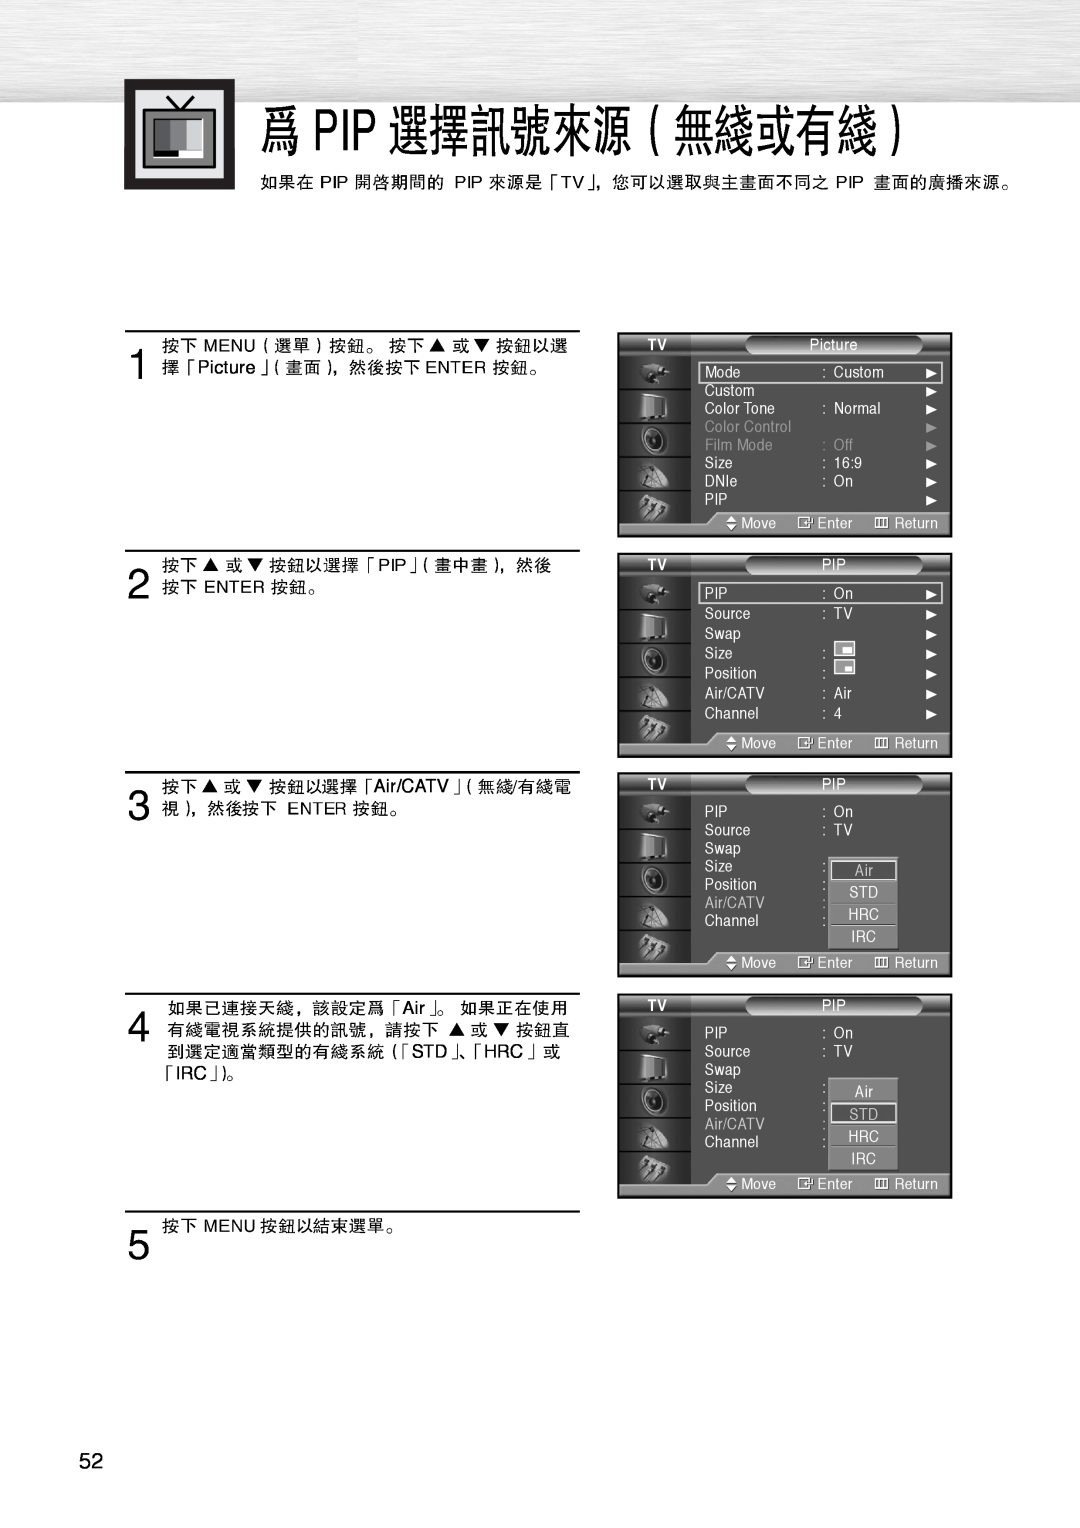 Samsung PL-42D4S manual Color Control, Film Mode, AirSTD, Air/CATV 